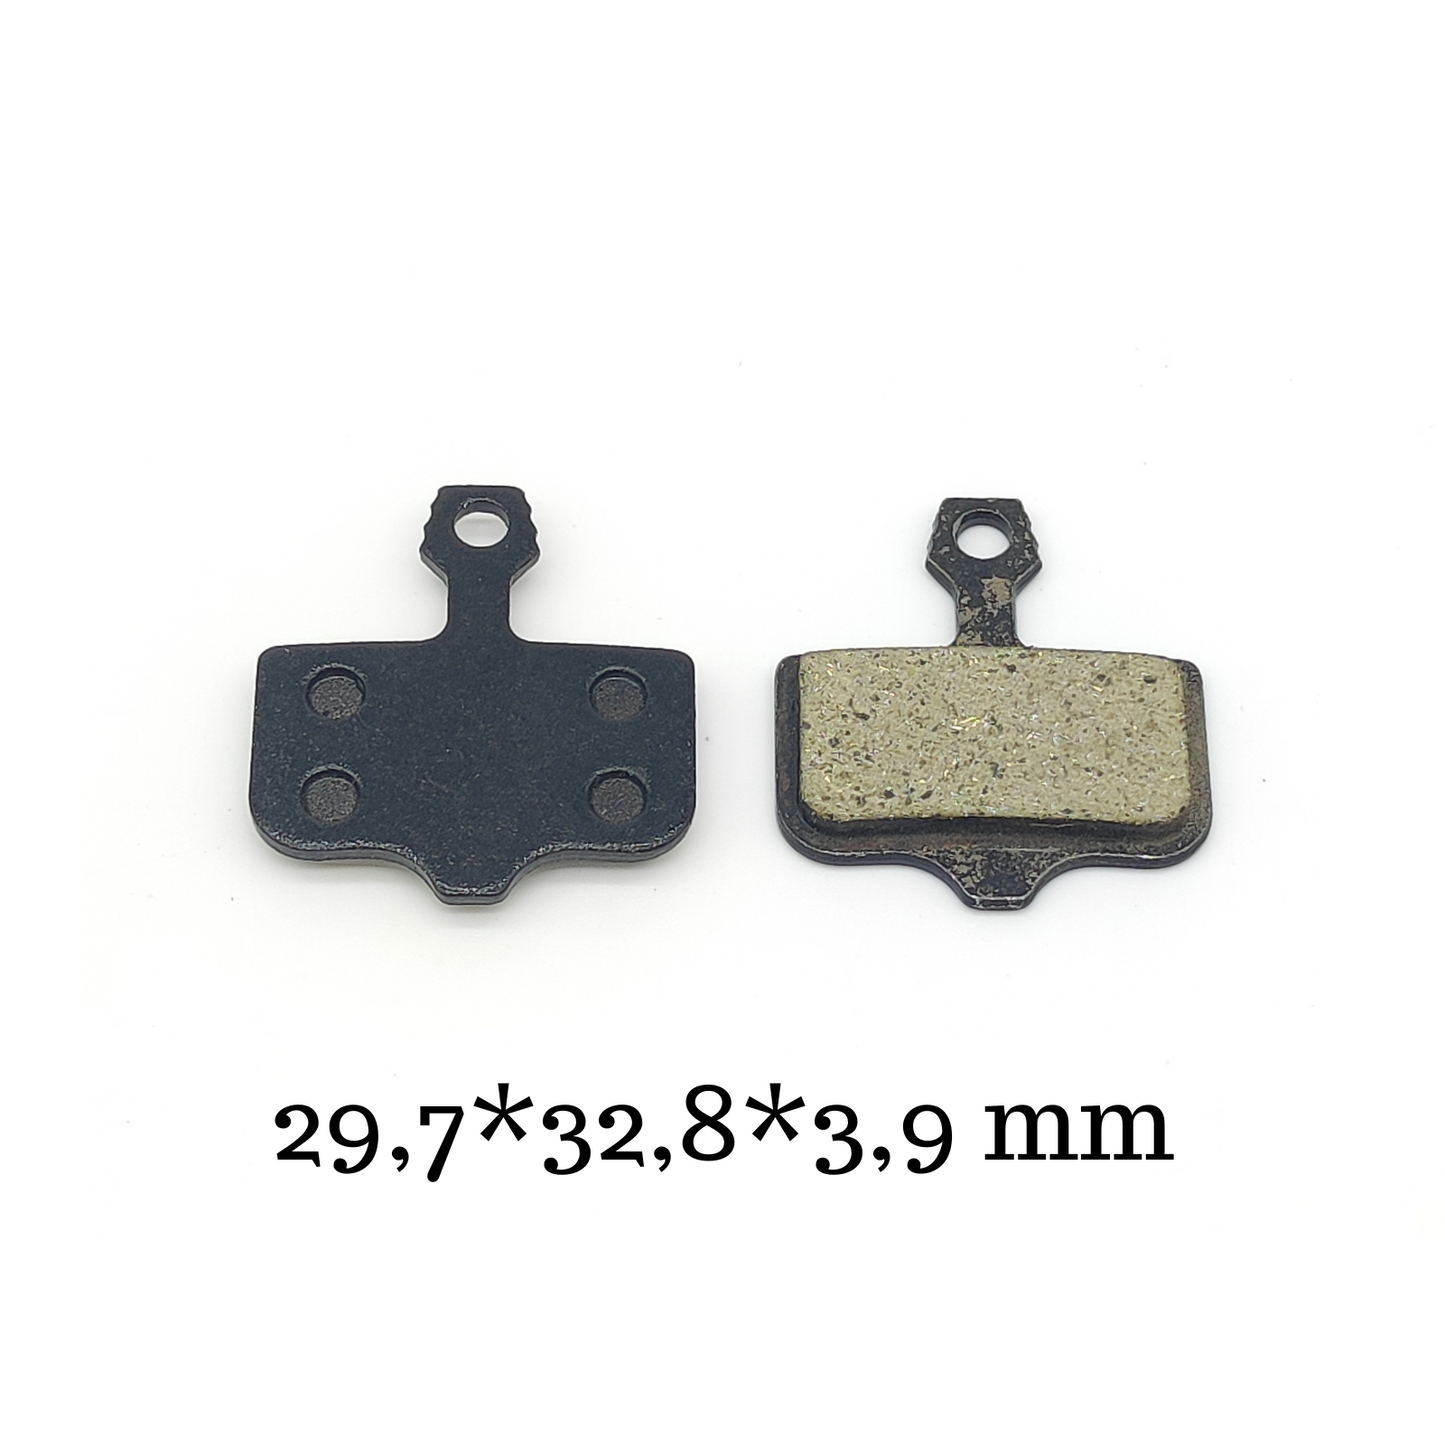 Dualtron Thunder brake pad Semi metal brake pads for Nutt brake caliper